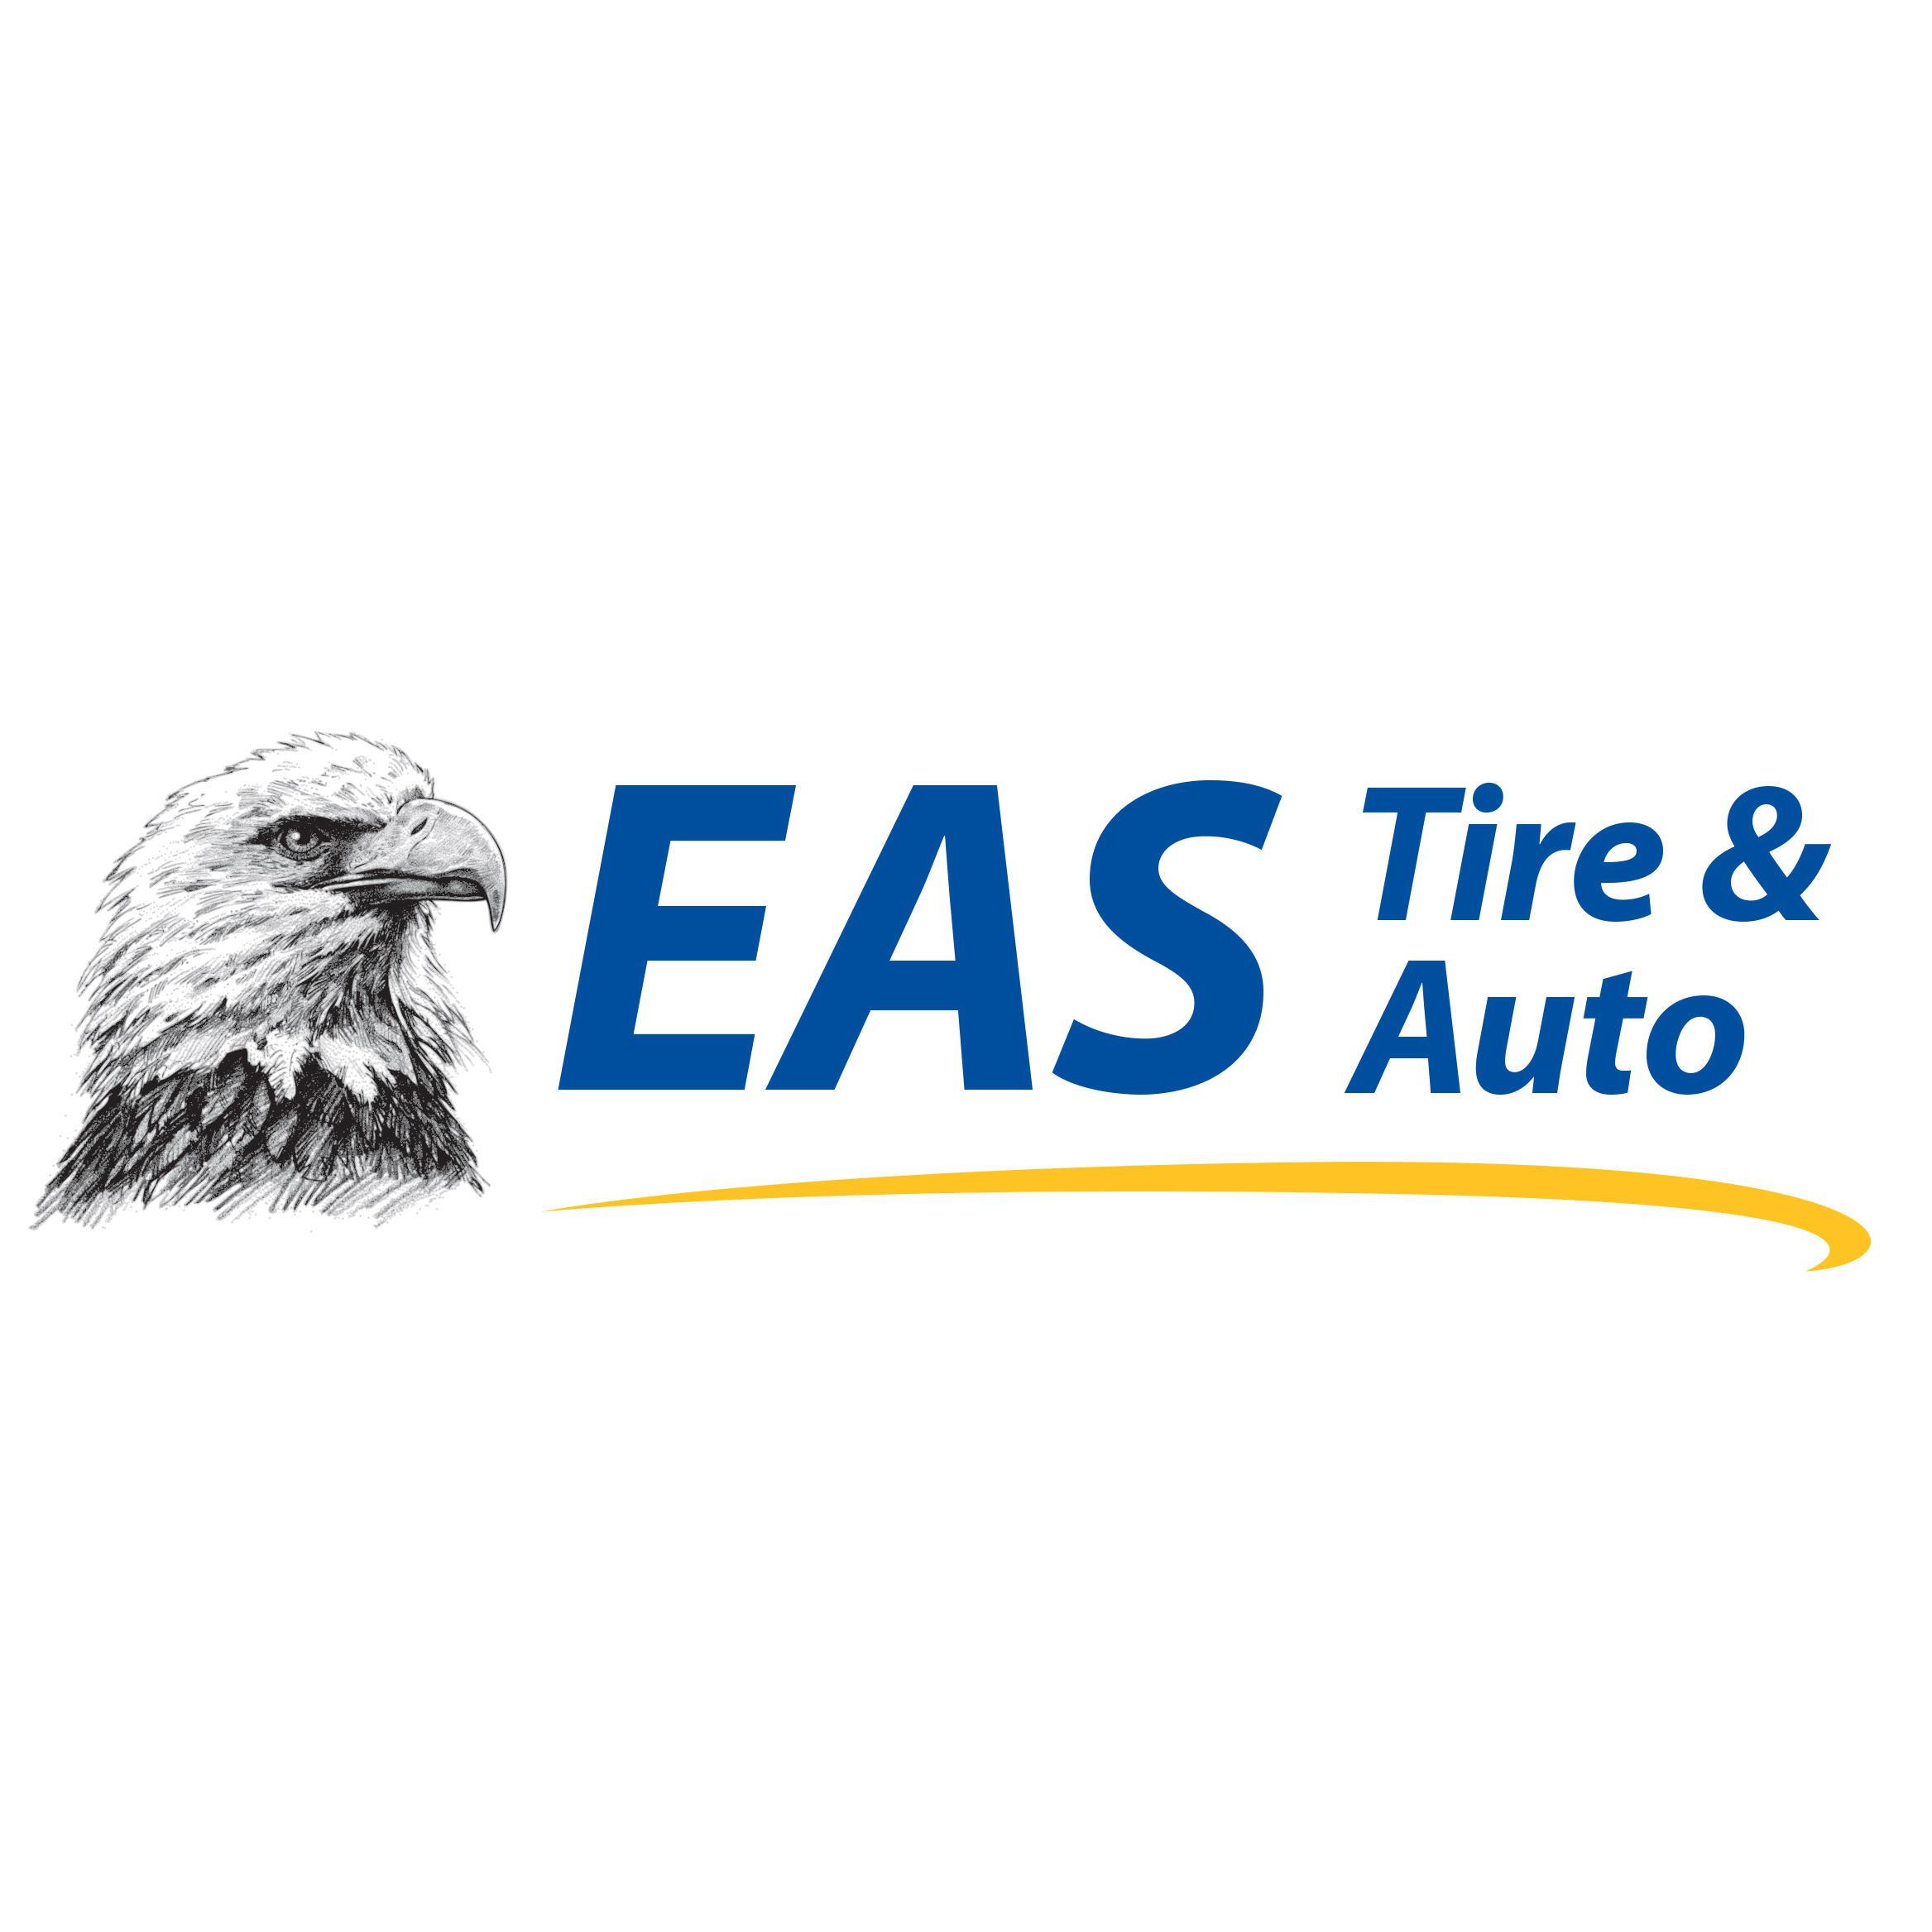 EAS Tire & Auto - Littleton, CO 80128 - (303)948-2988 | ShowMeLocal.com